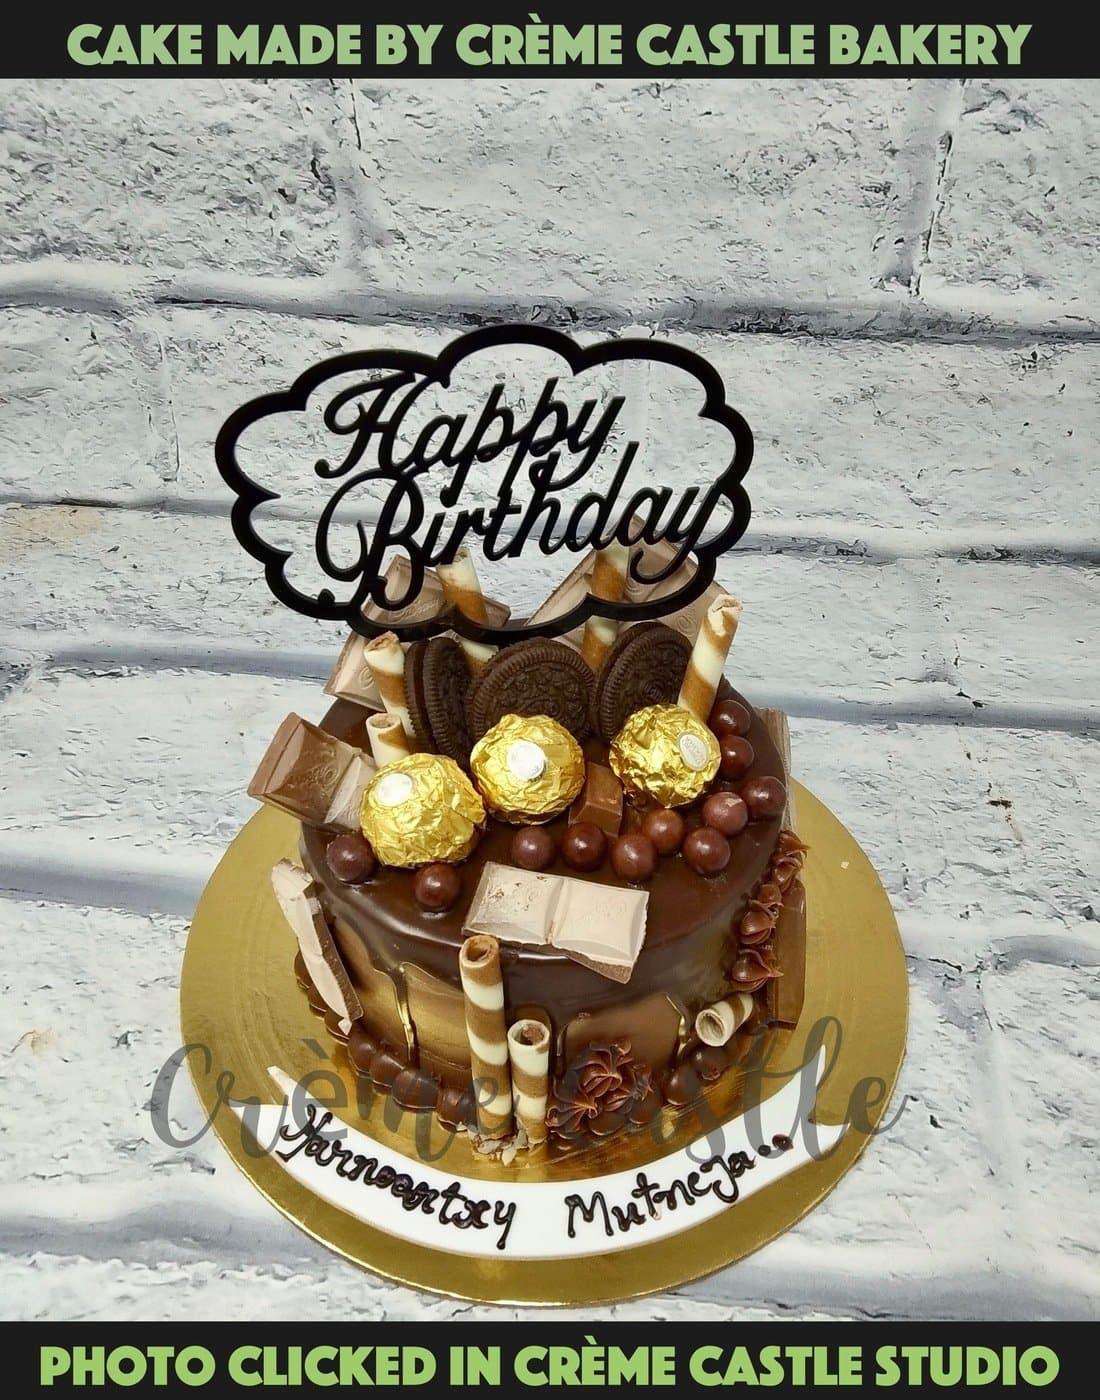 Delicious Chocolate Cake With Ferrero Rocher